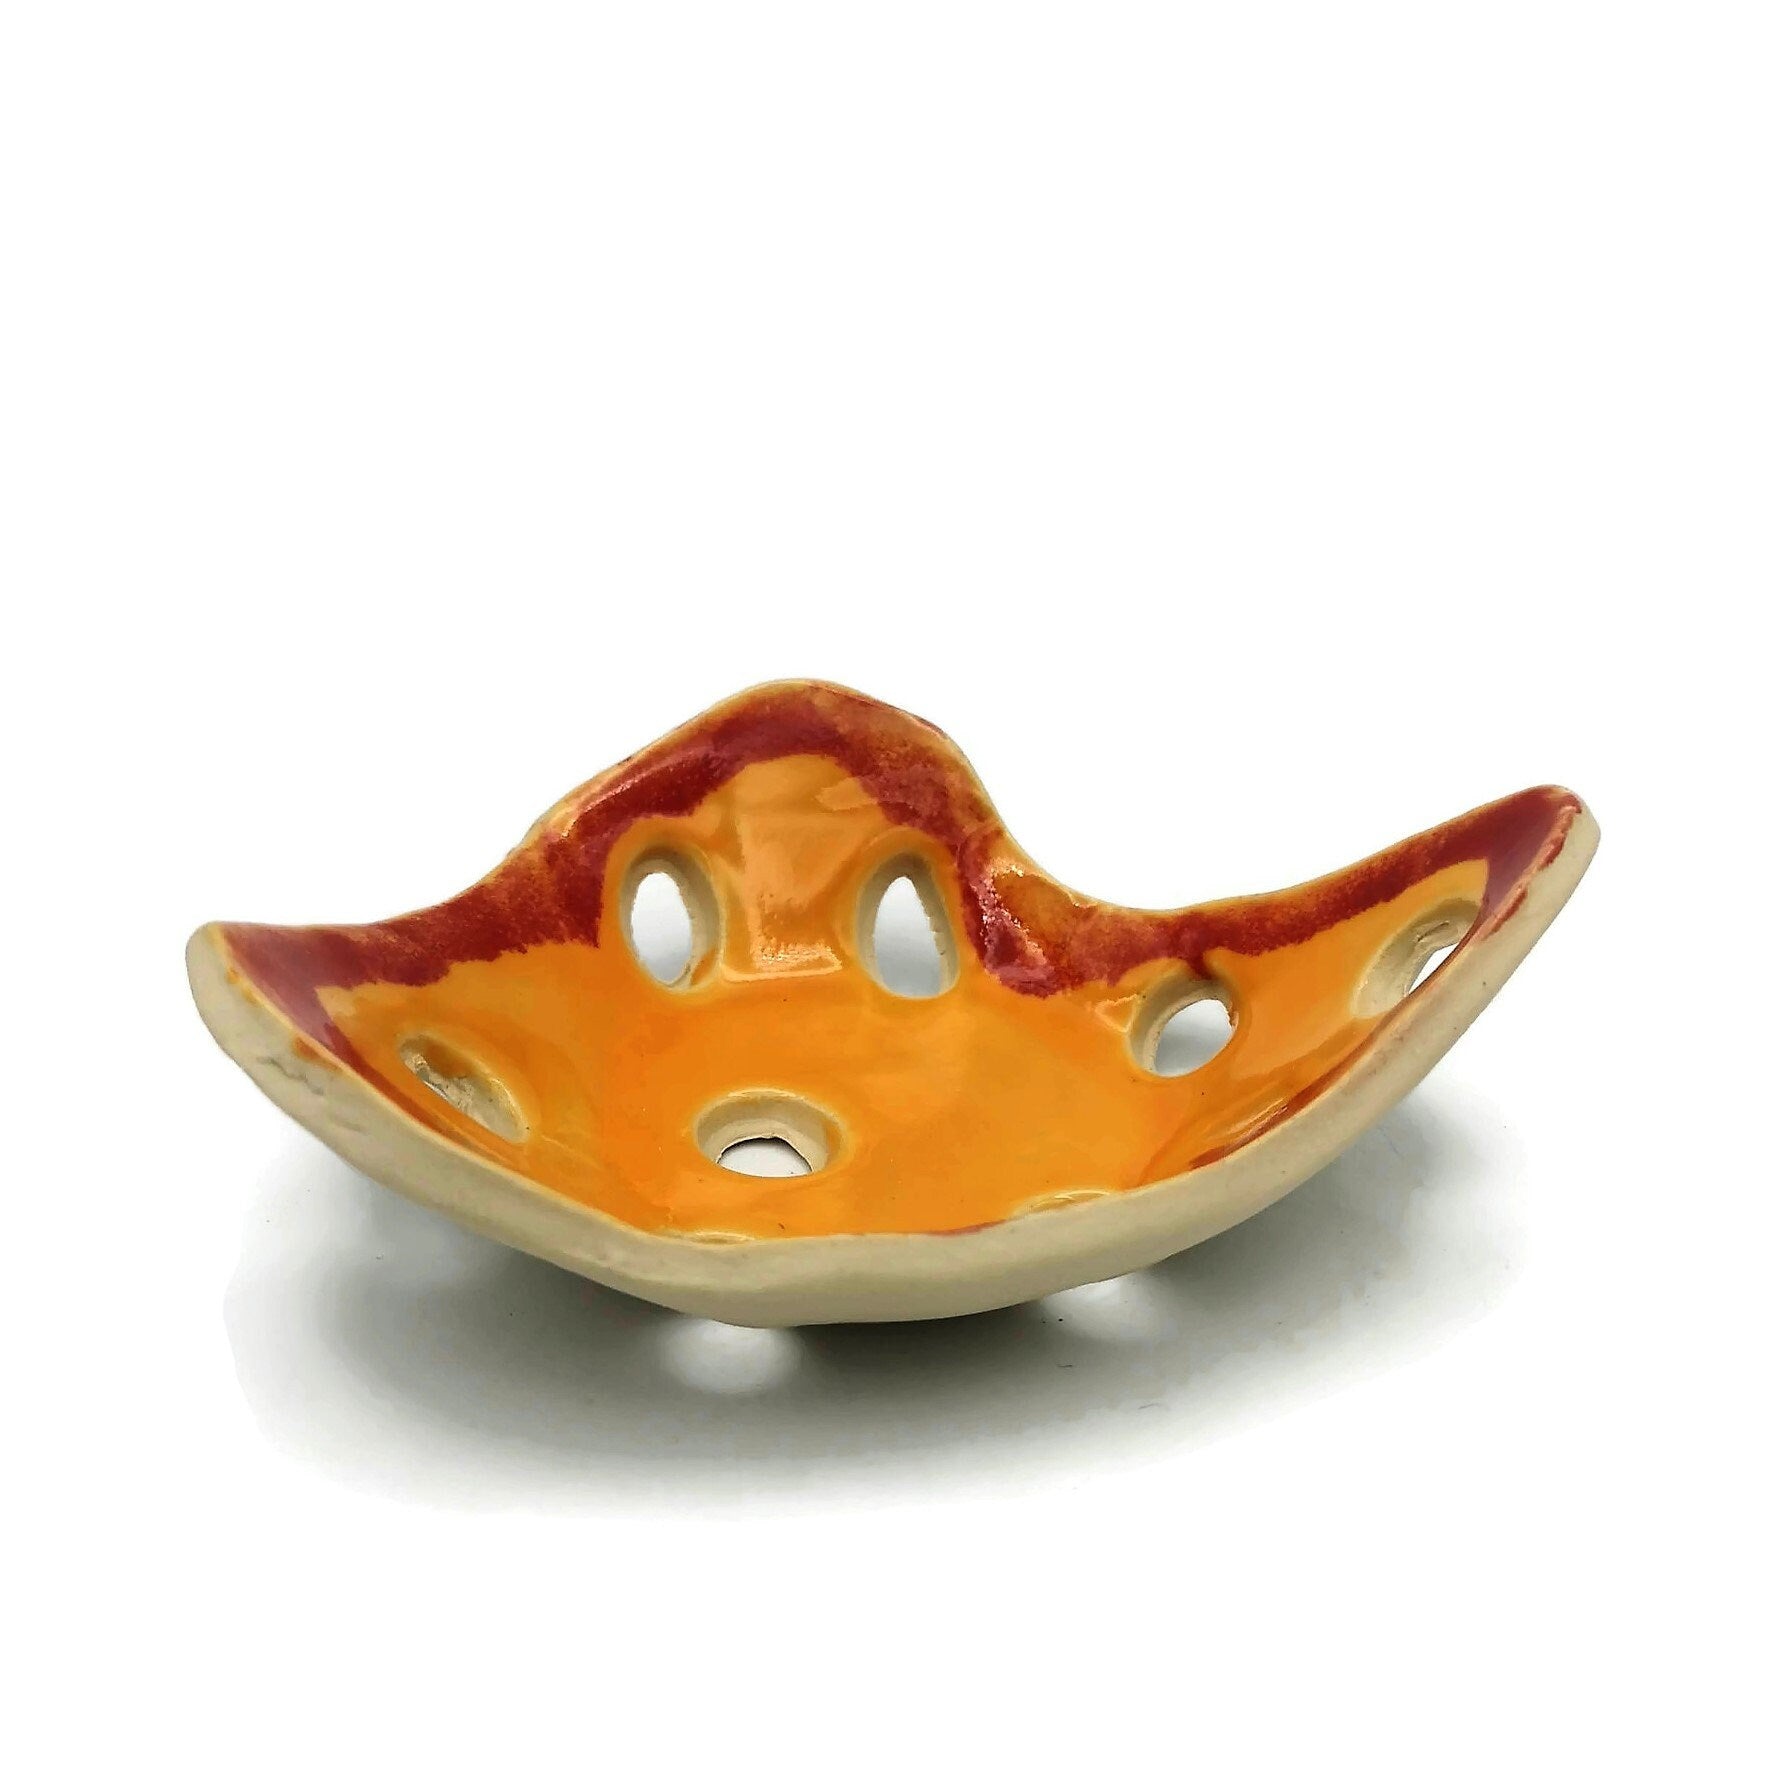 Small Handmade Ceramic Bowl With Holes, Yellow Pottery Decorative Clay Trinket Dish, Mom Birthday Gift From Daughter, Jewelry Organizer - Ceramica Ana Rafael